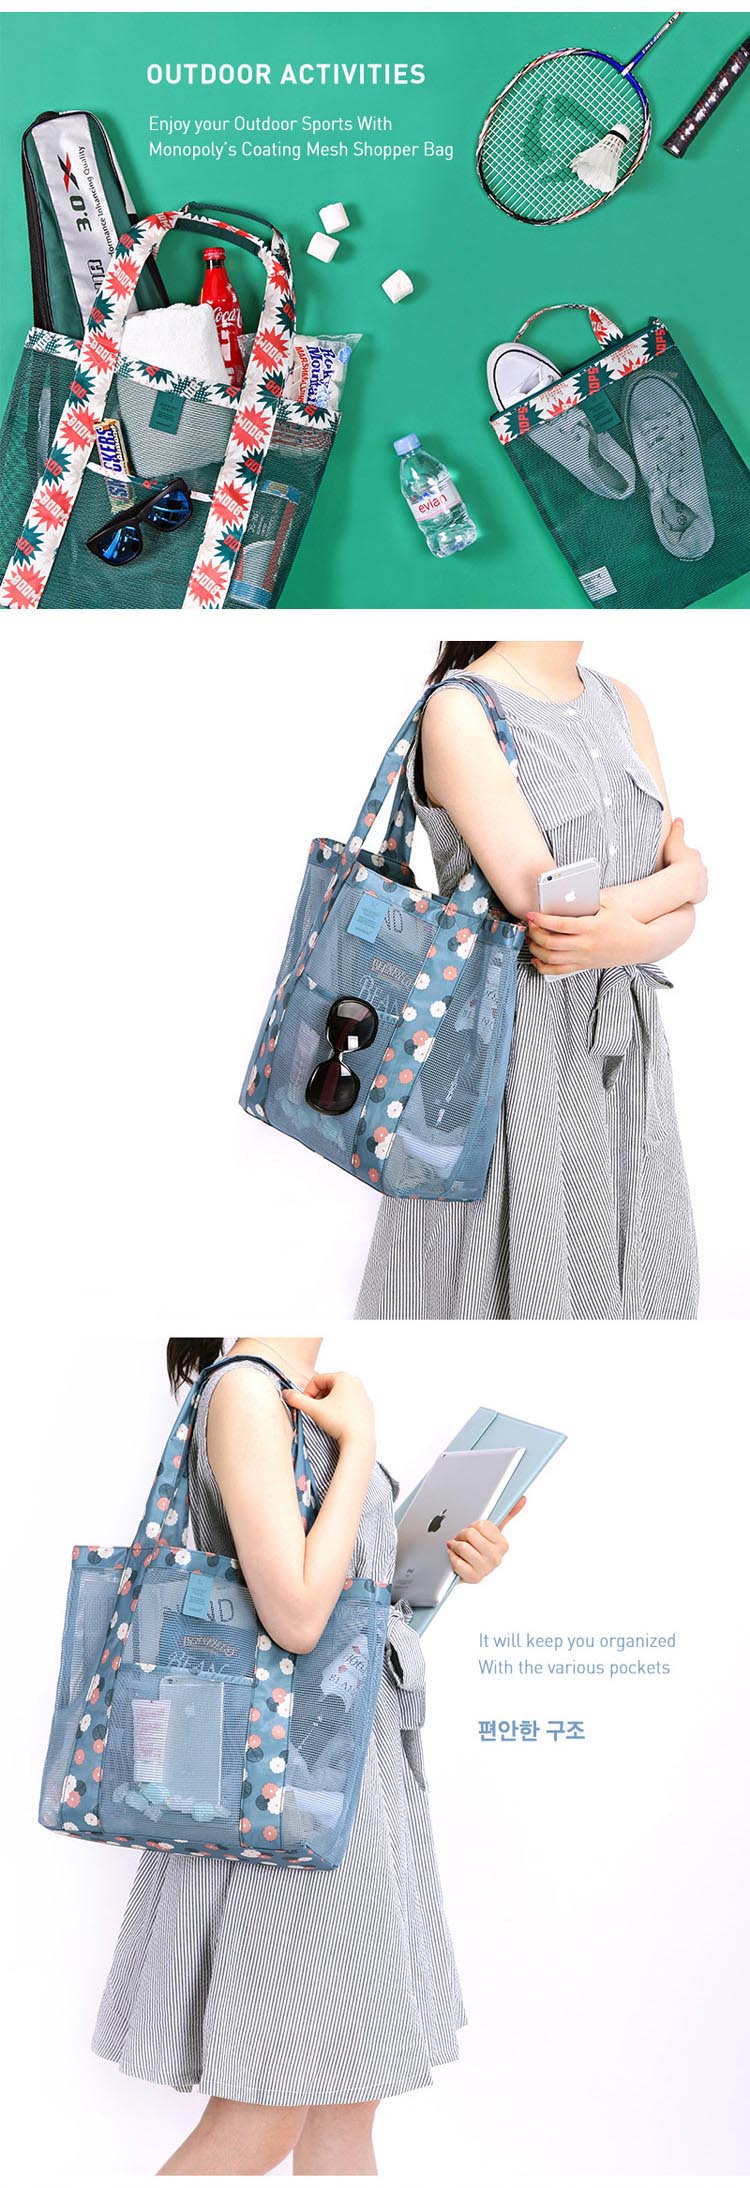 WEEKEIGHT fashion female mesh single shoulder bag shopping bag bag bag size Travel Beach Bag6